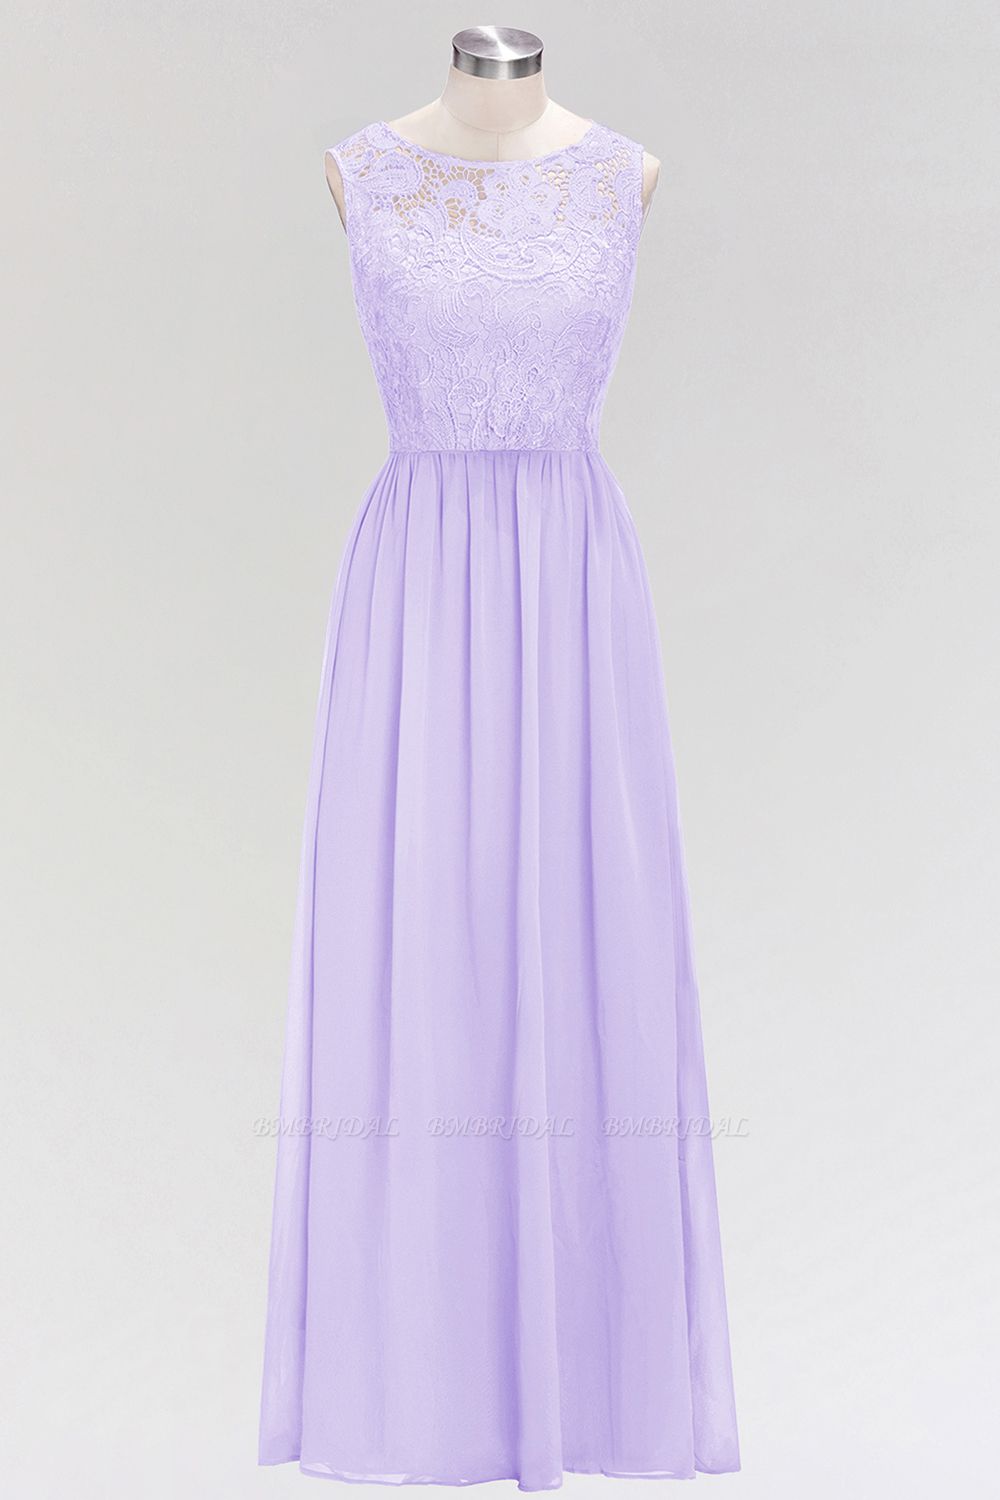 BMbridal Elegant Lace Sleeveless Pleated Lavender Bridesmaid Dresses Online